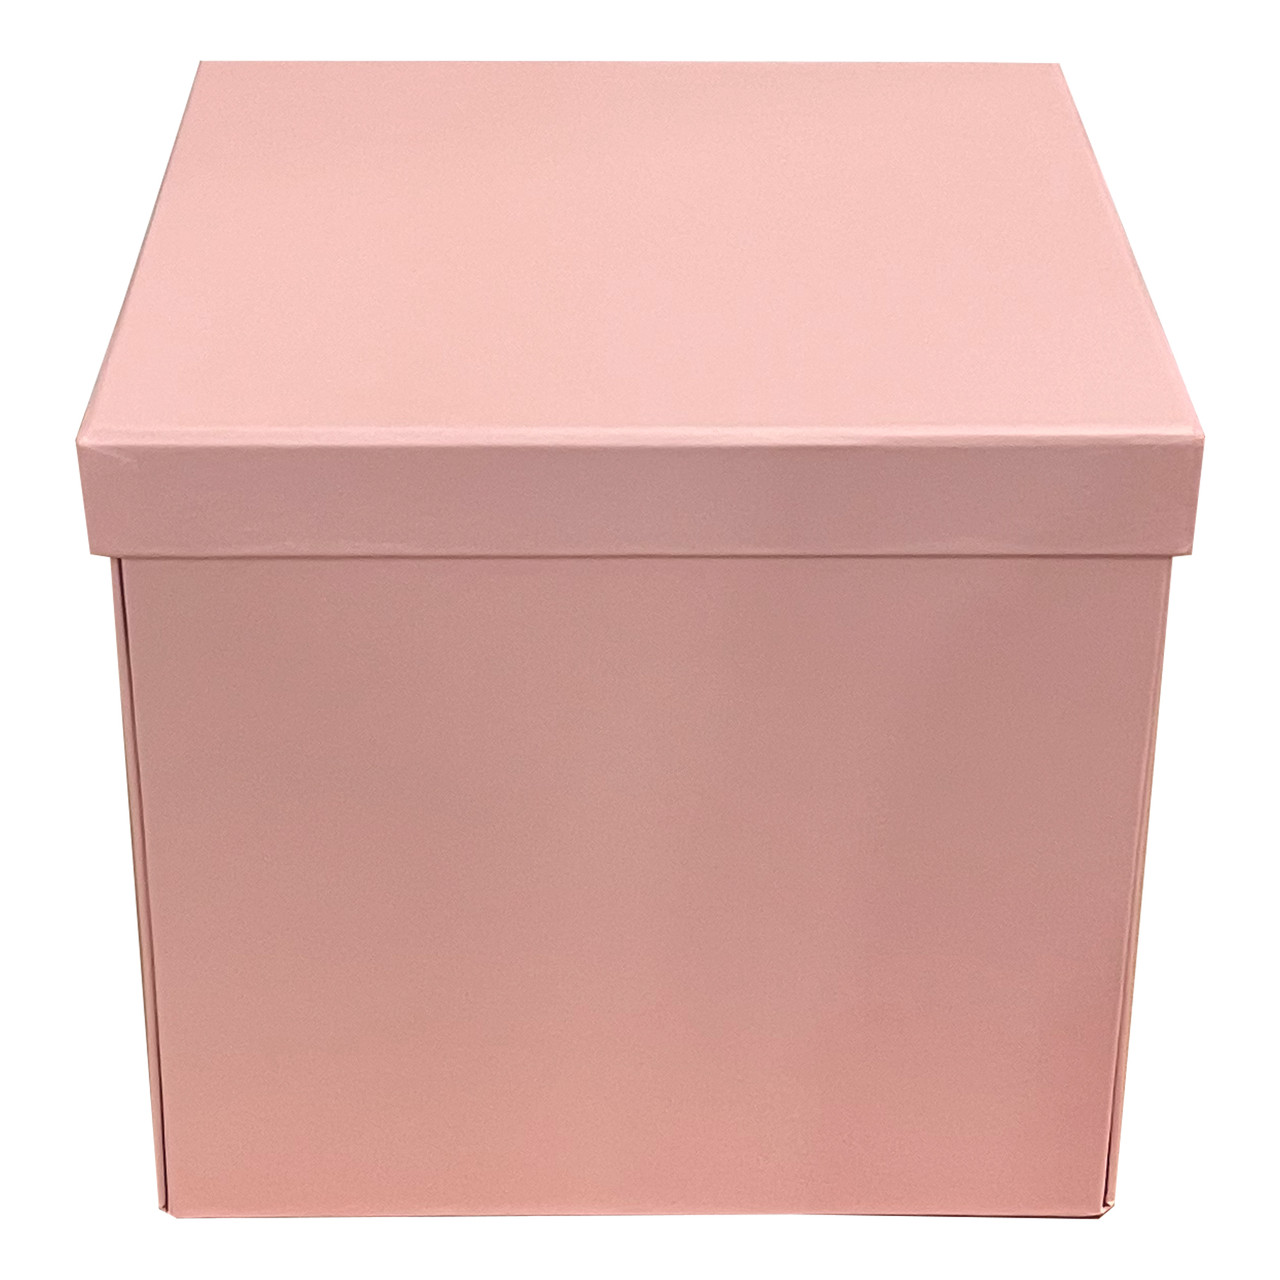 8.75 Square Double Level Surprise Box - Pink